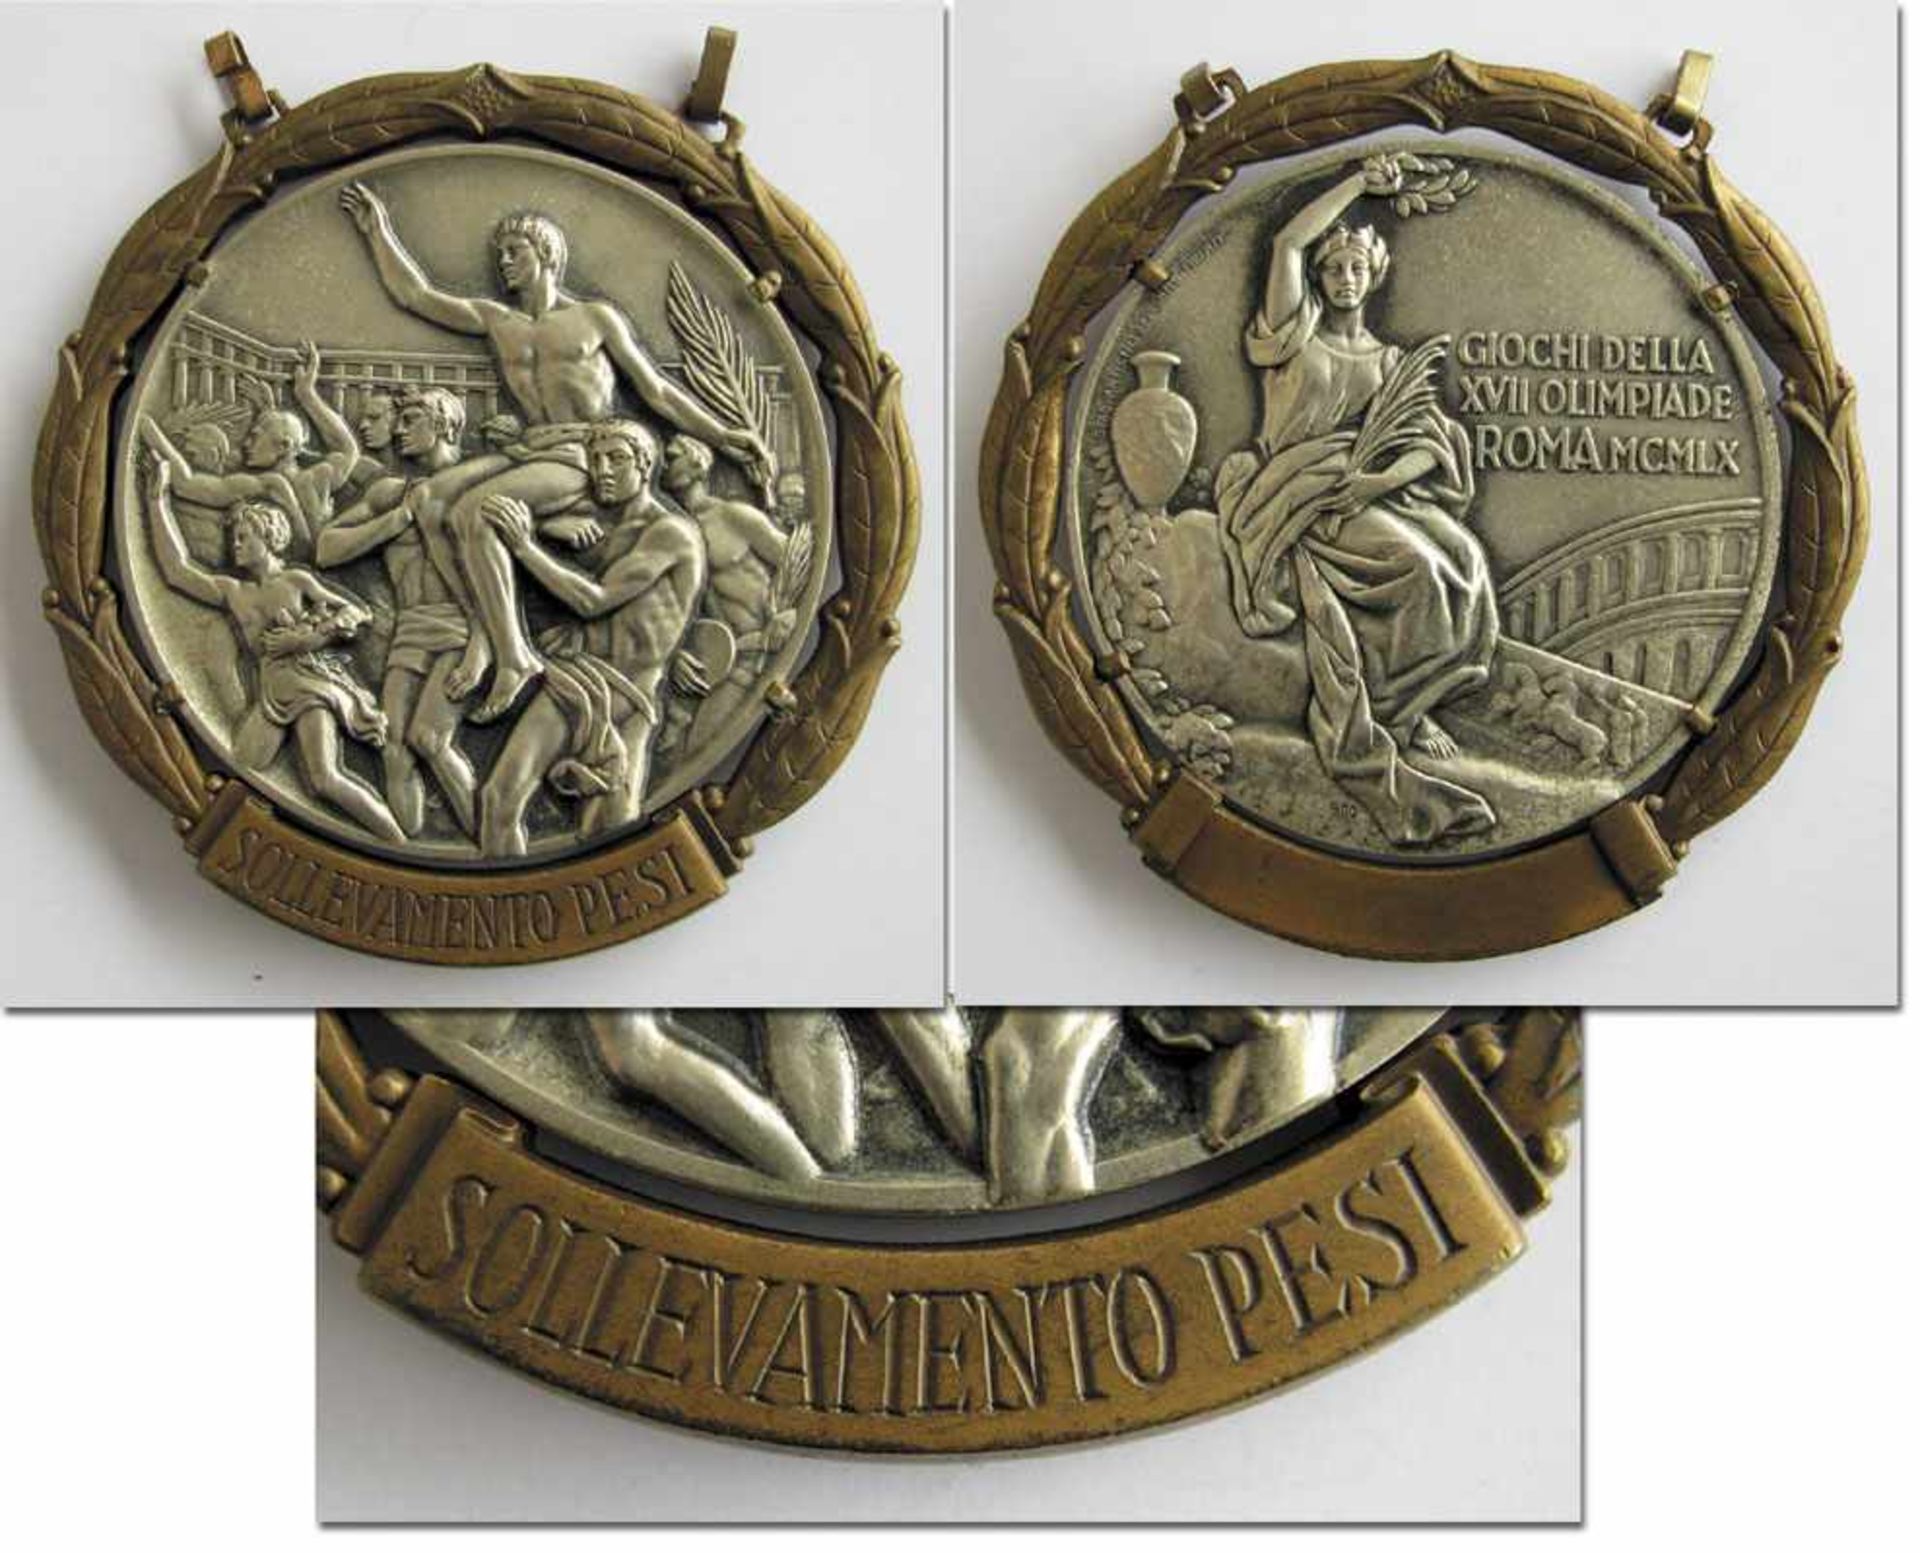 Olympic Games 1960 Winner medal Weightlifting - Winner medal for the second place weightlifting at